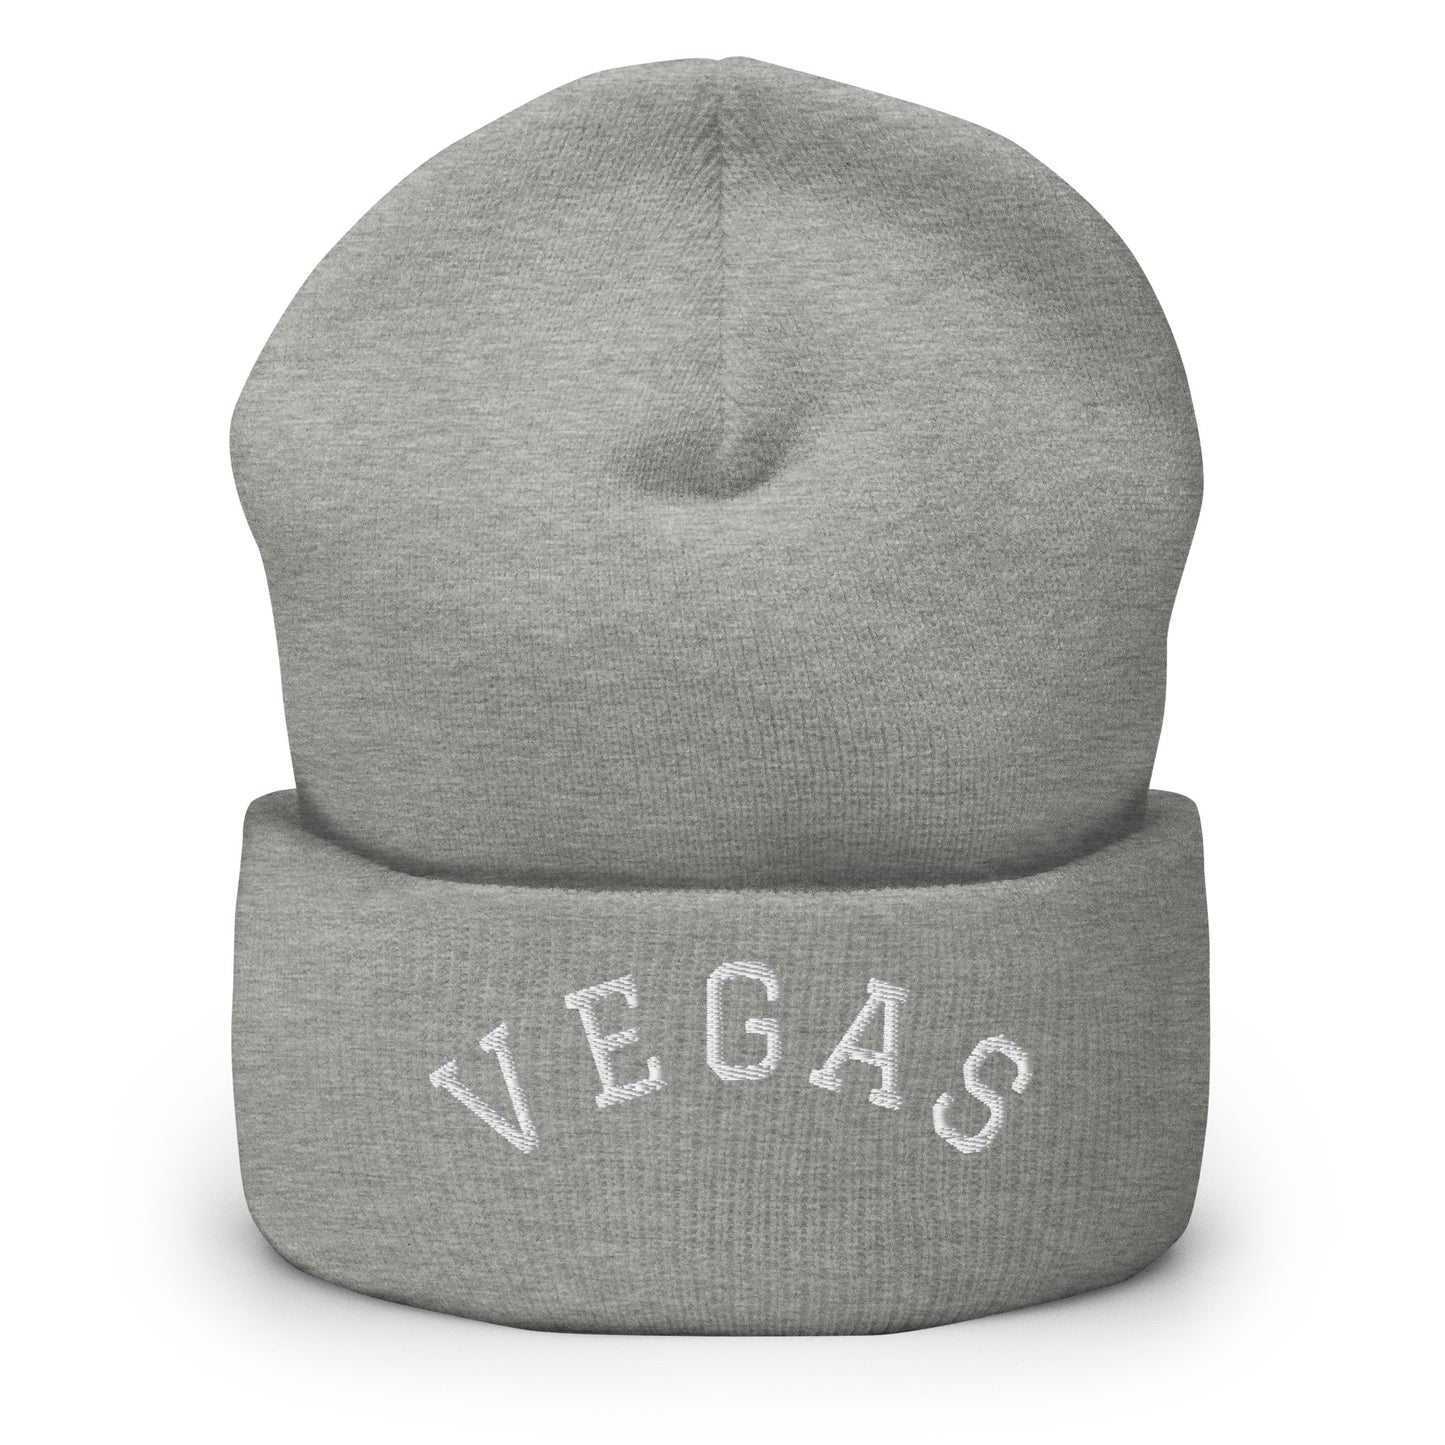 Las Vegas Arch Cuffed Beanie Hat